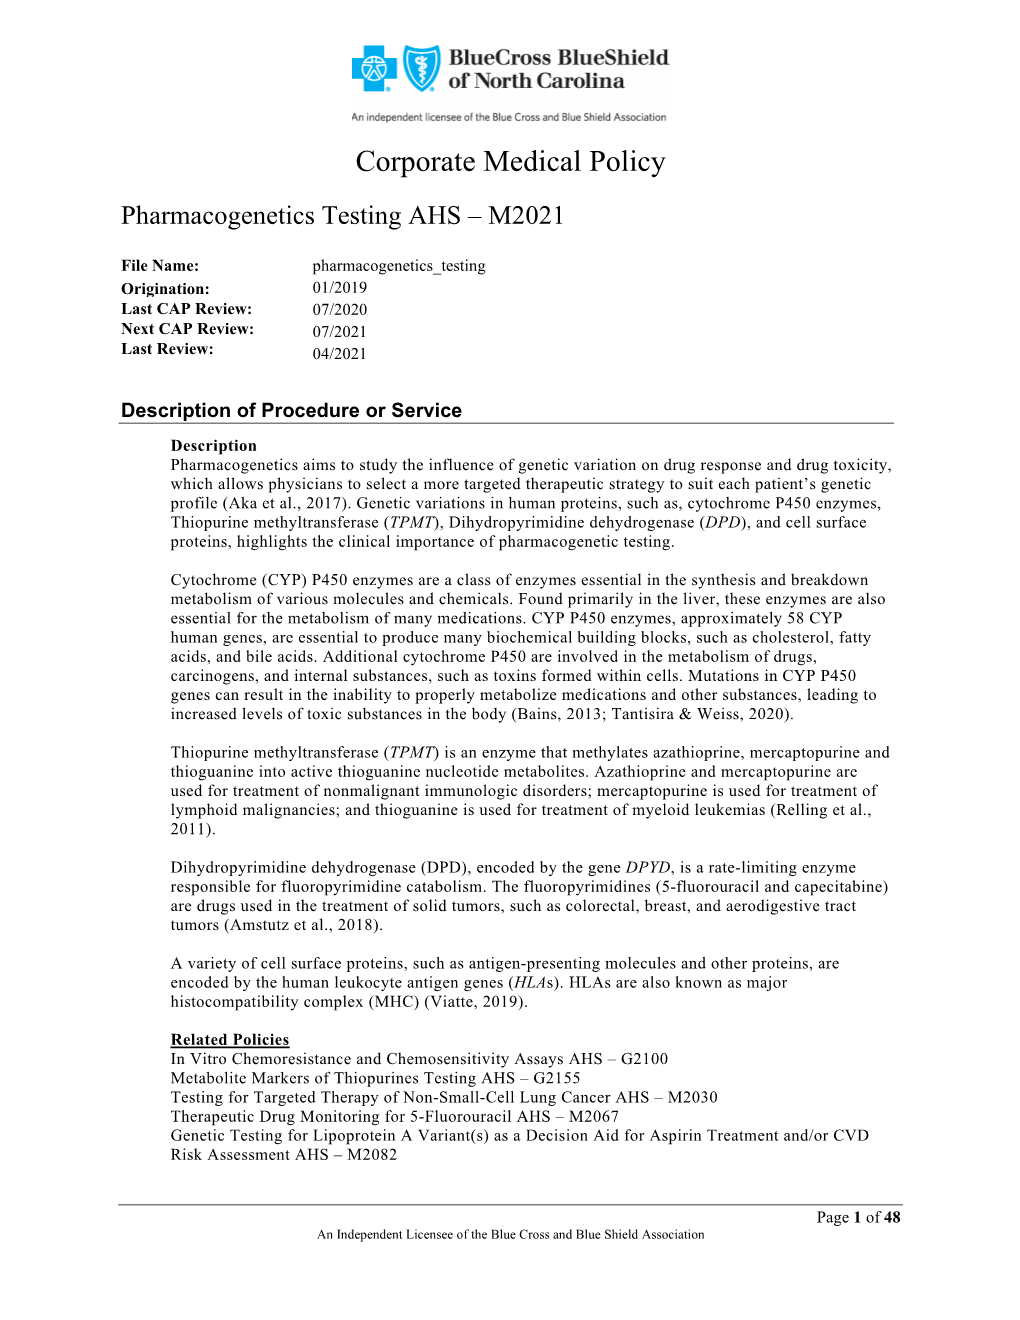 Pharmacogenetics Testing AHS – M2021